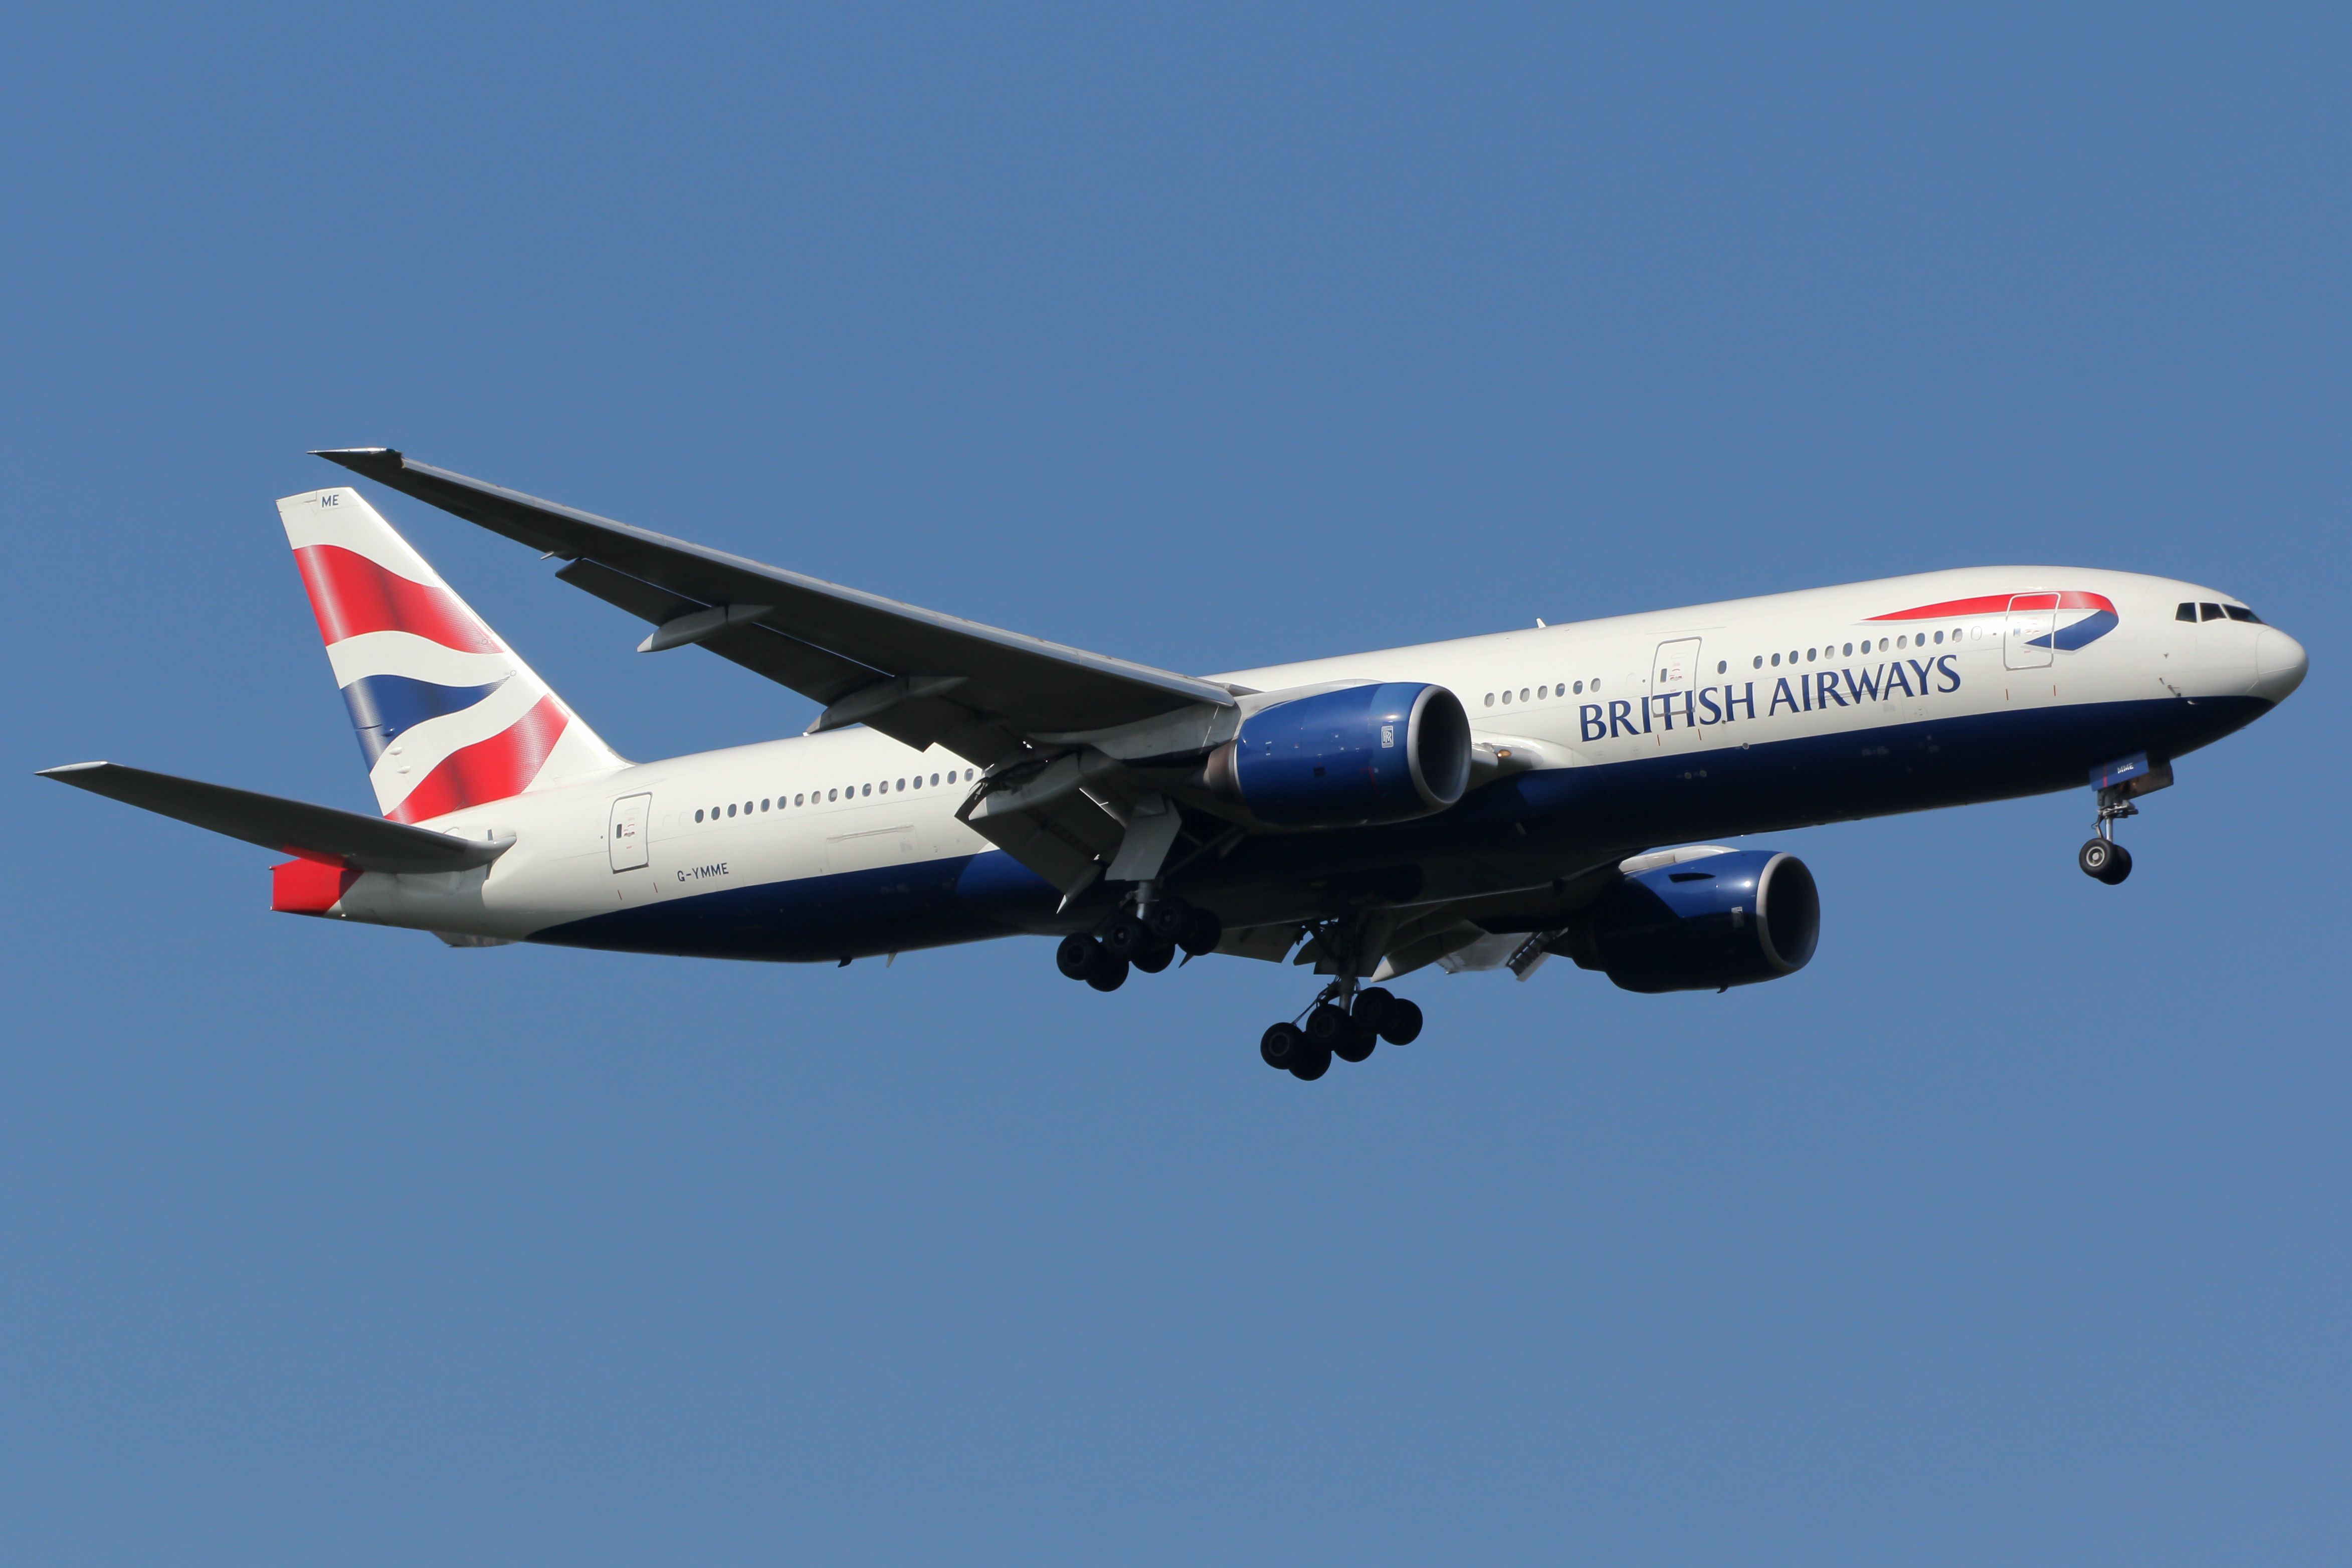 British Airways Boeing 777 Landing In Sunny Conditions